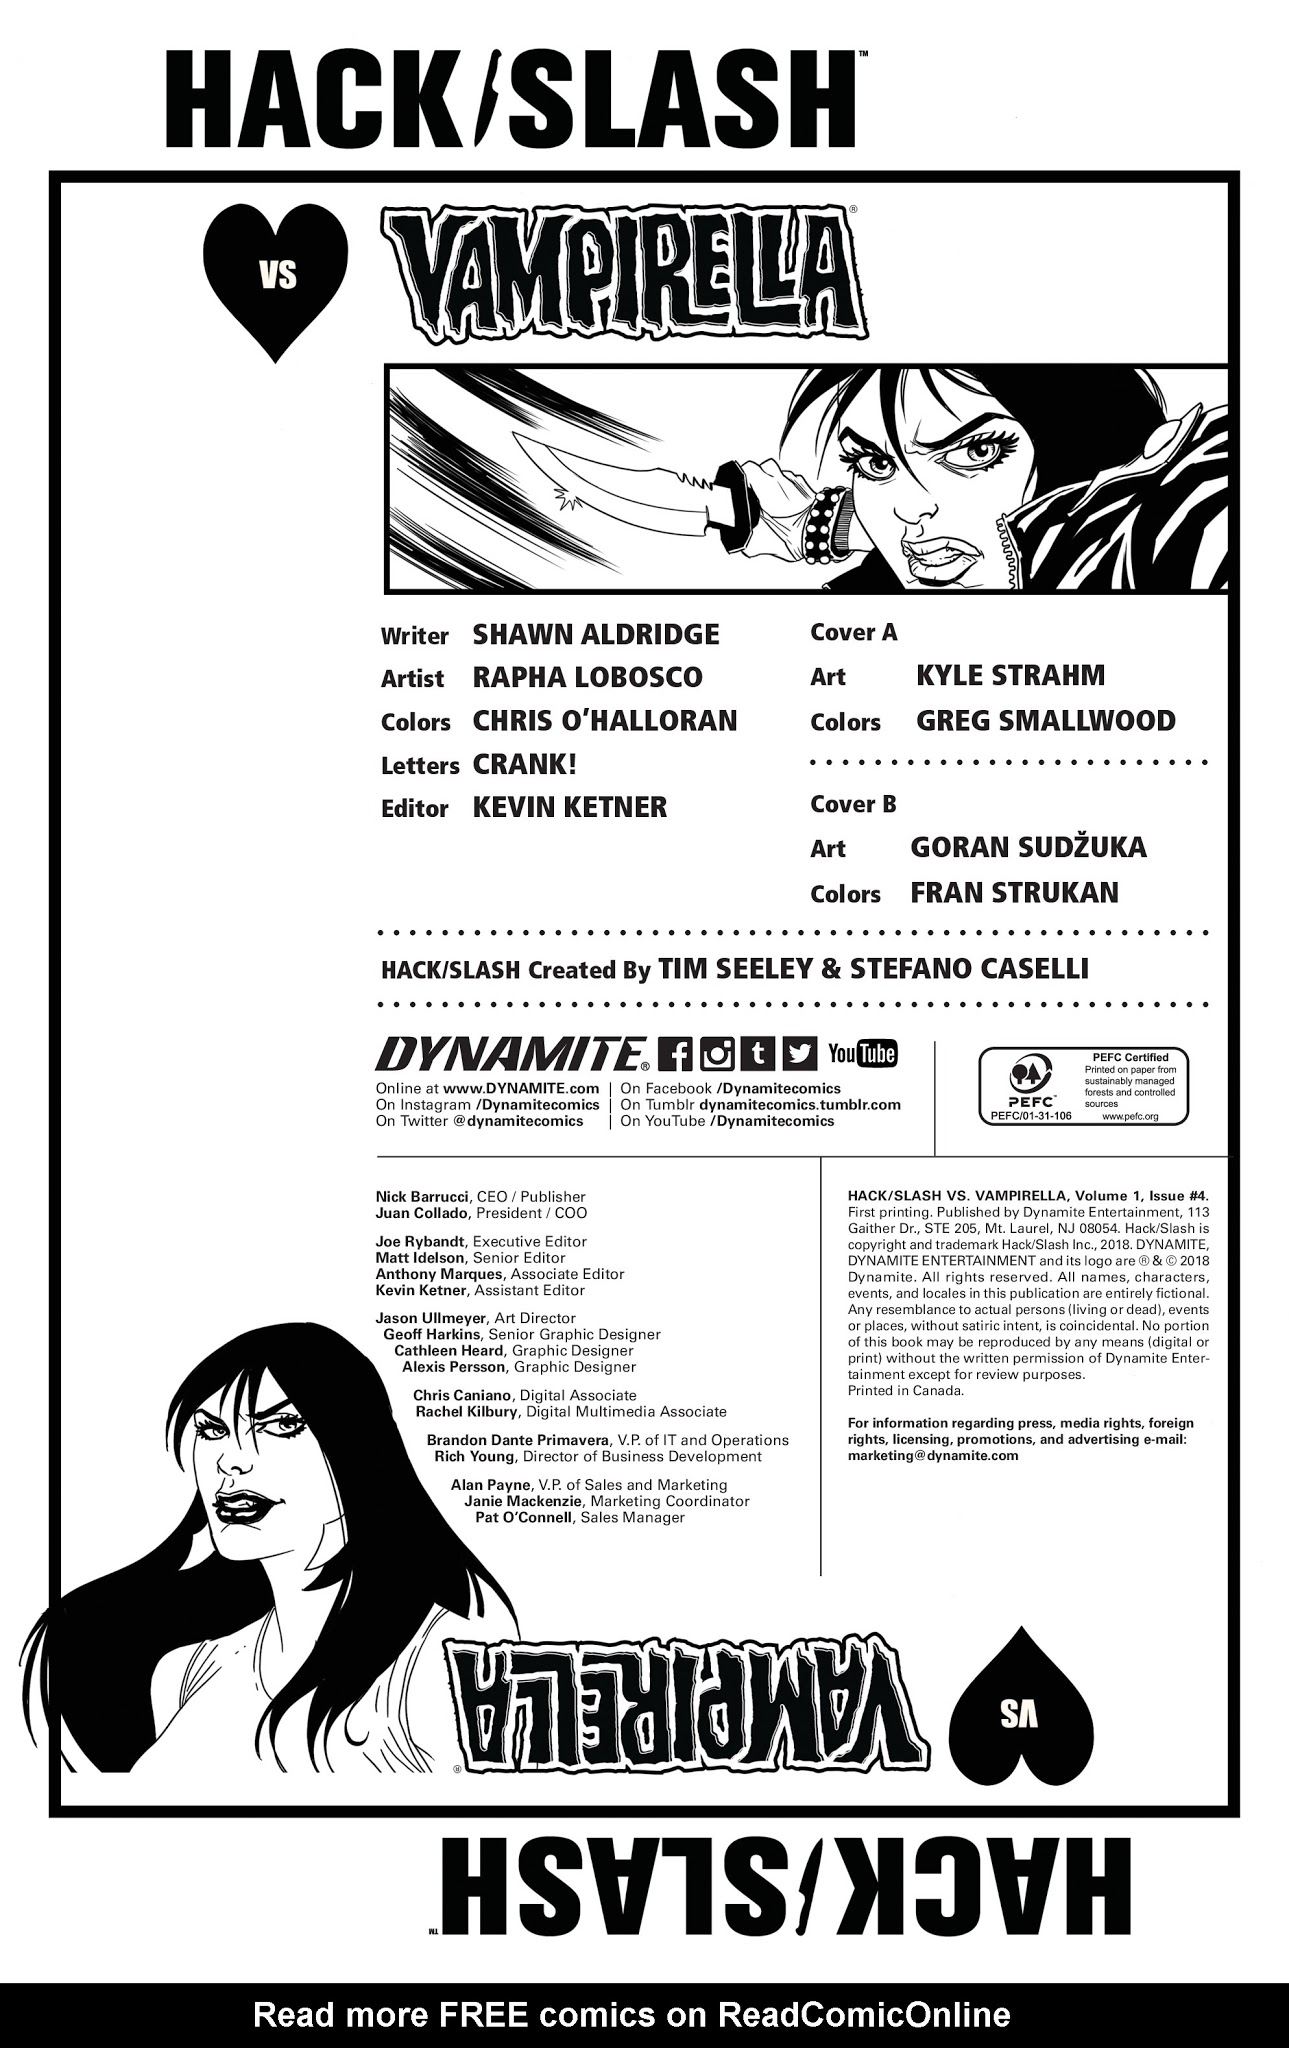 Read online Hack/Slash vs. Vampirella comic -  Issue #4 - 3